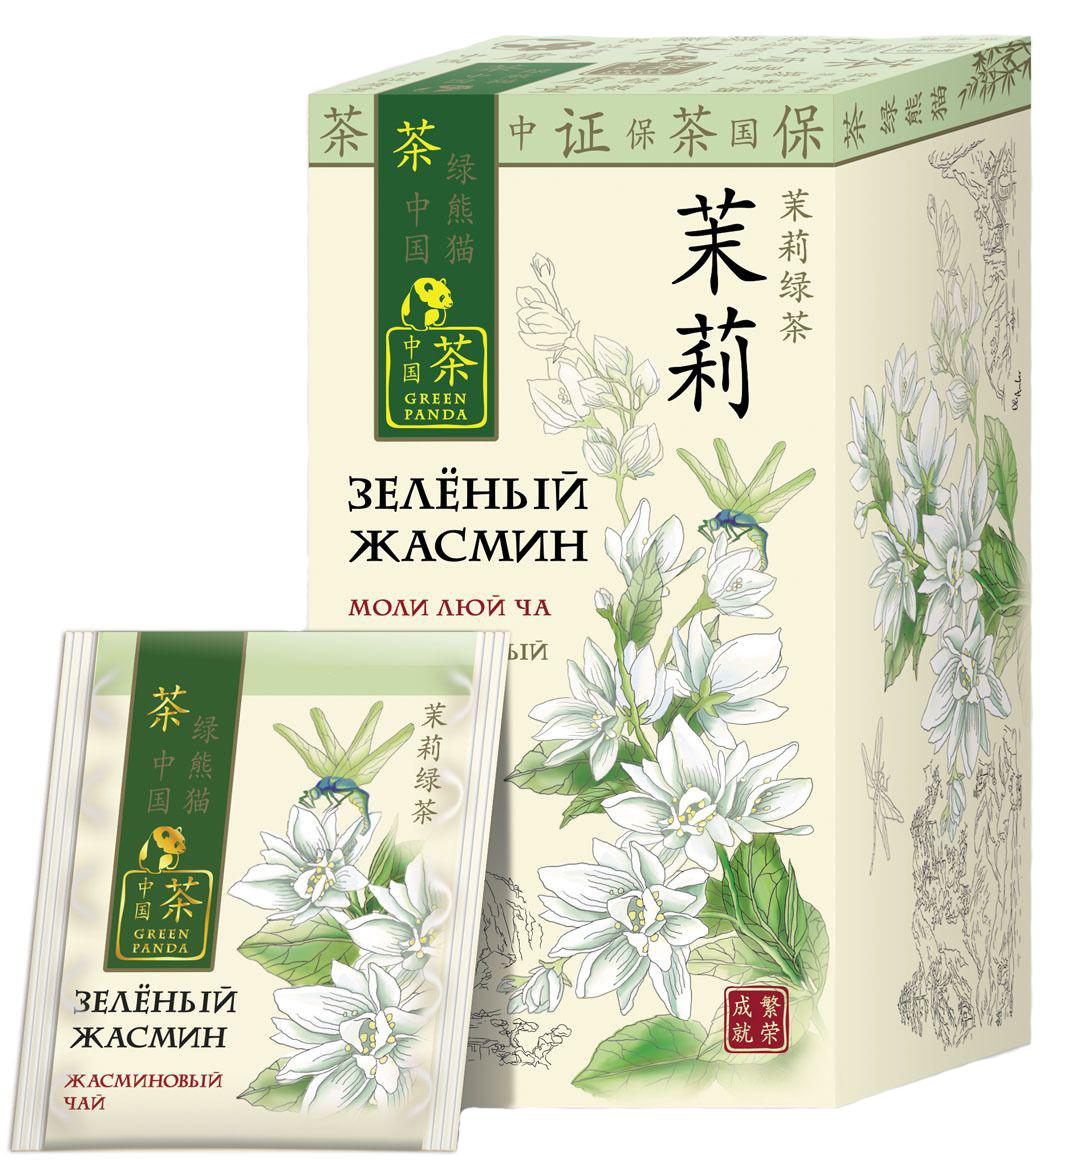 Чай Зеленая Панда Зеленый Жасмин зел (25*2г) 50г - интернет-магазин Близнецы